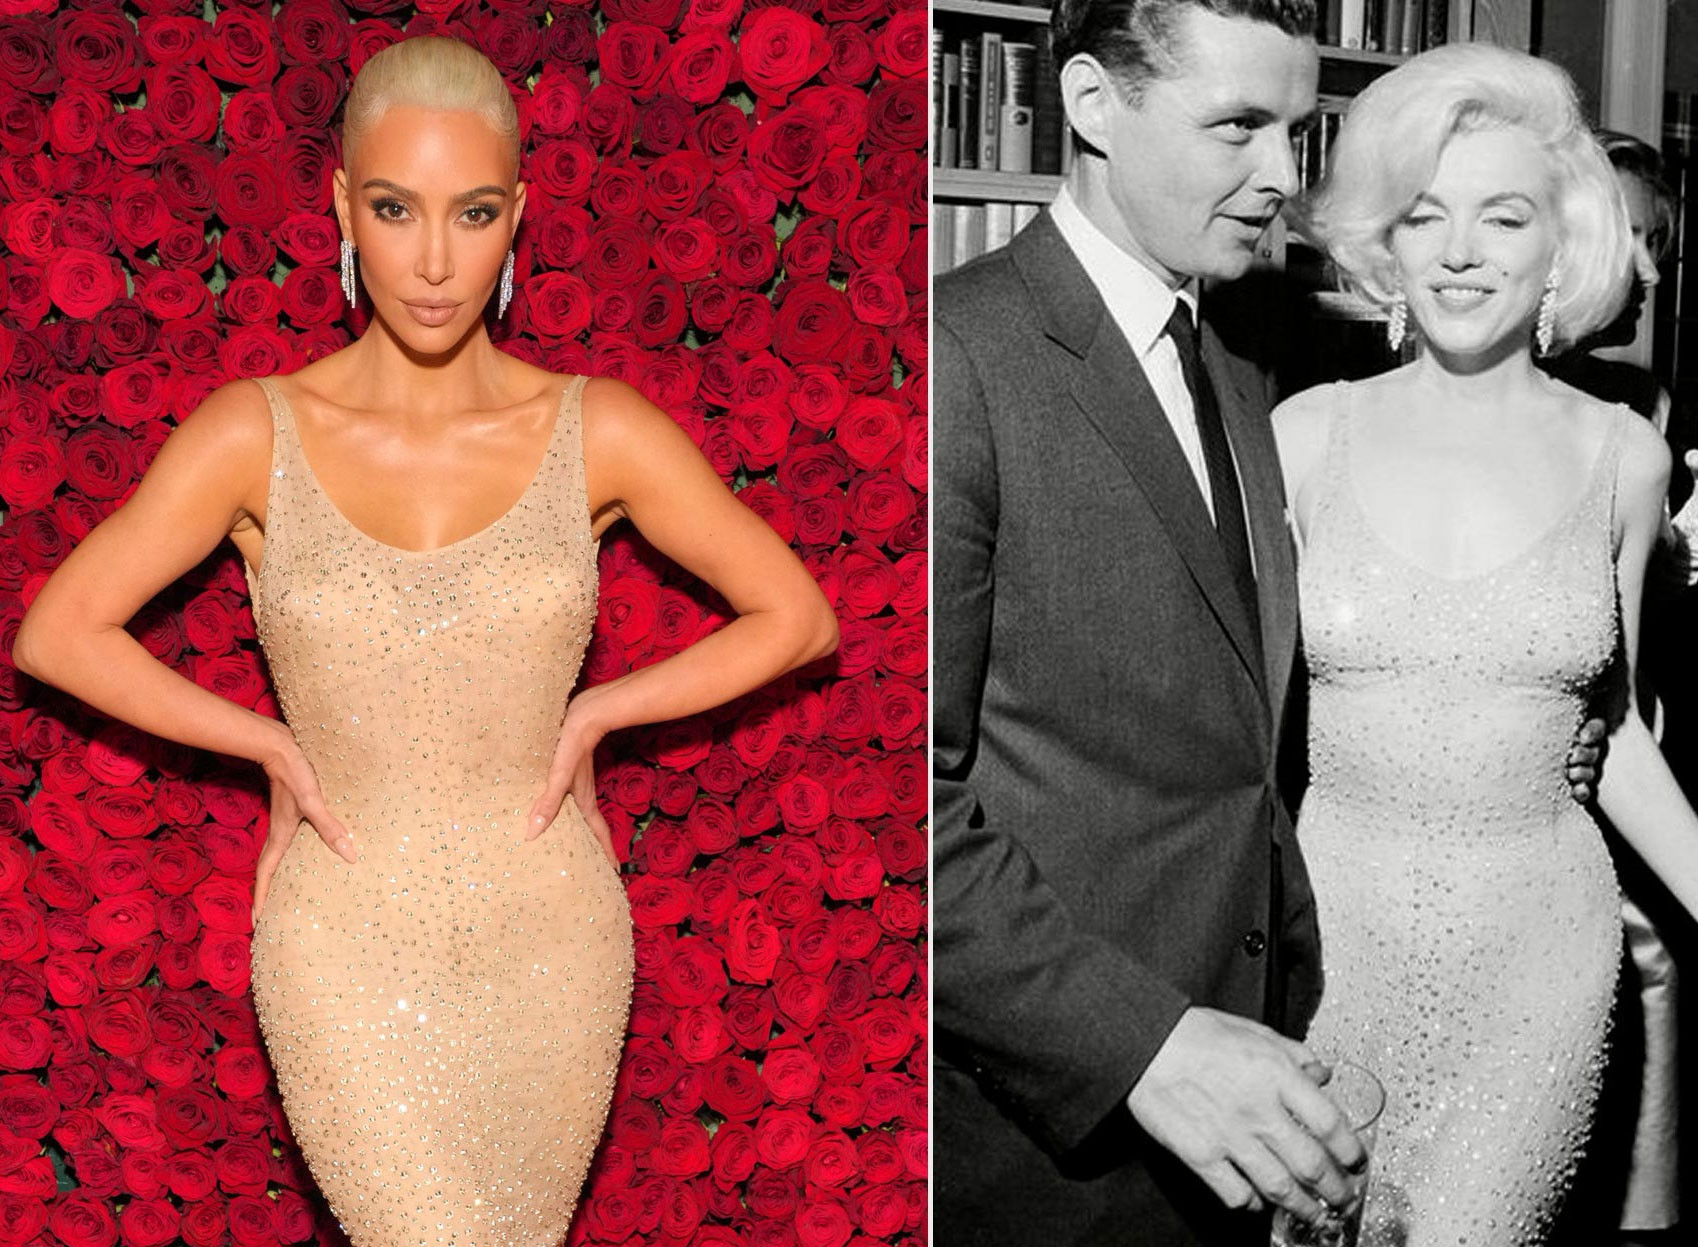 Owner of Marilyn Monroe dress says Kim Kardashian did not 'in any way'  damage it, Marilyn Monroe